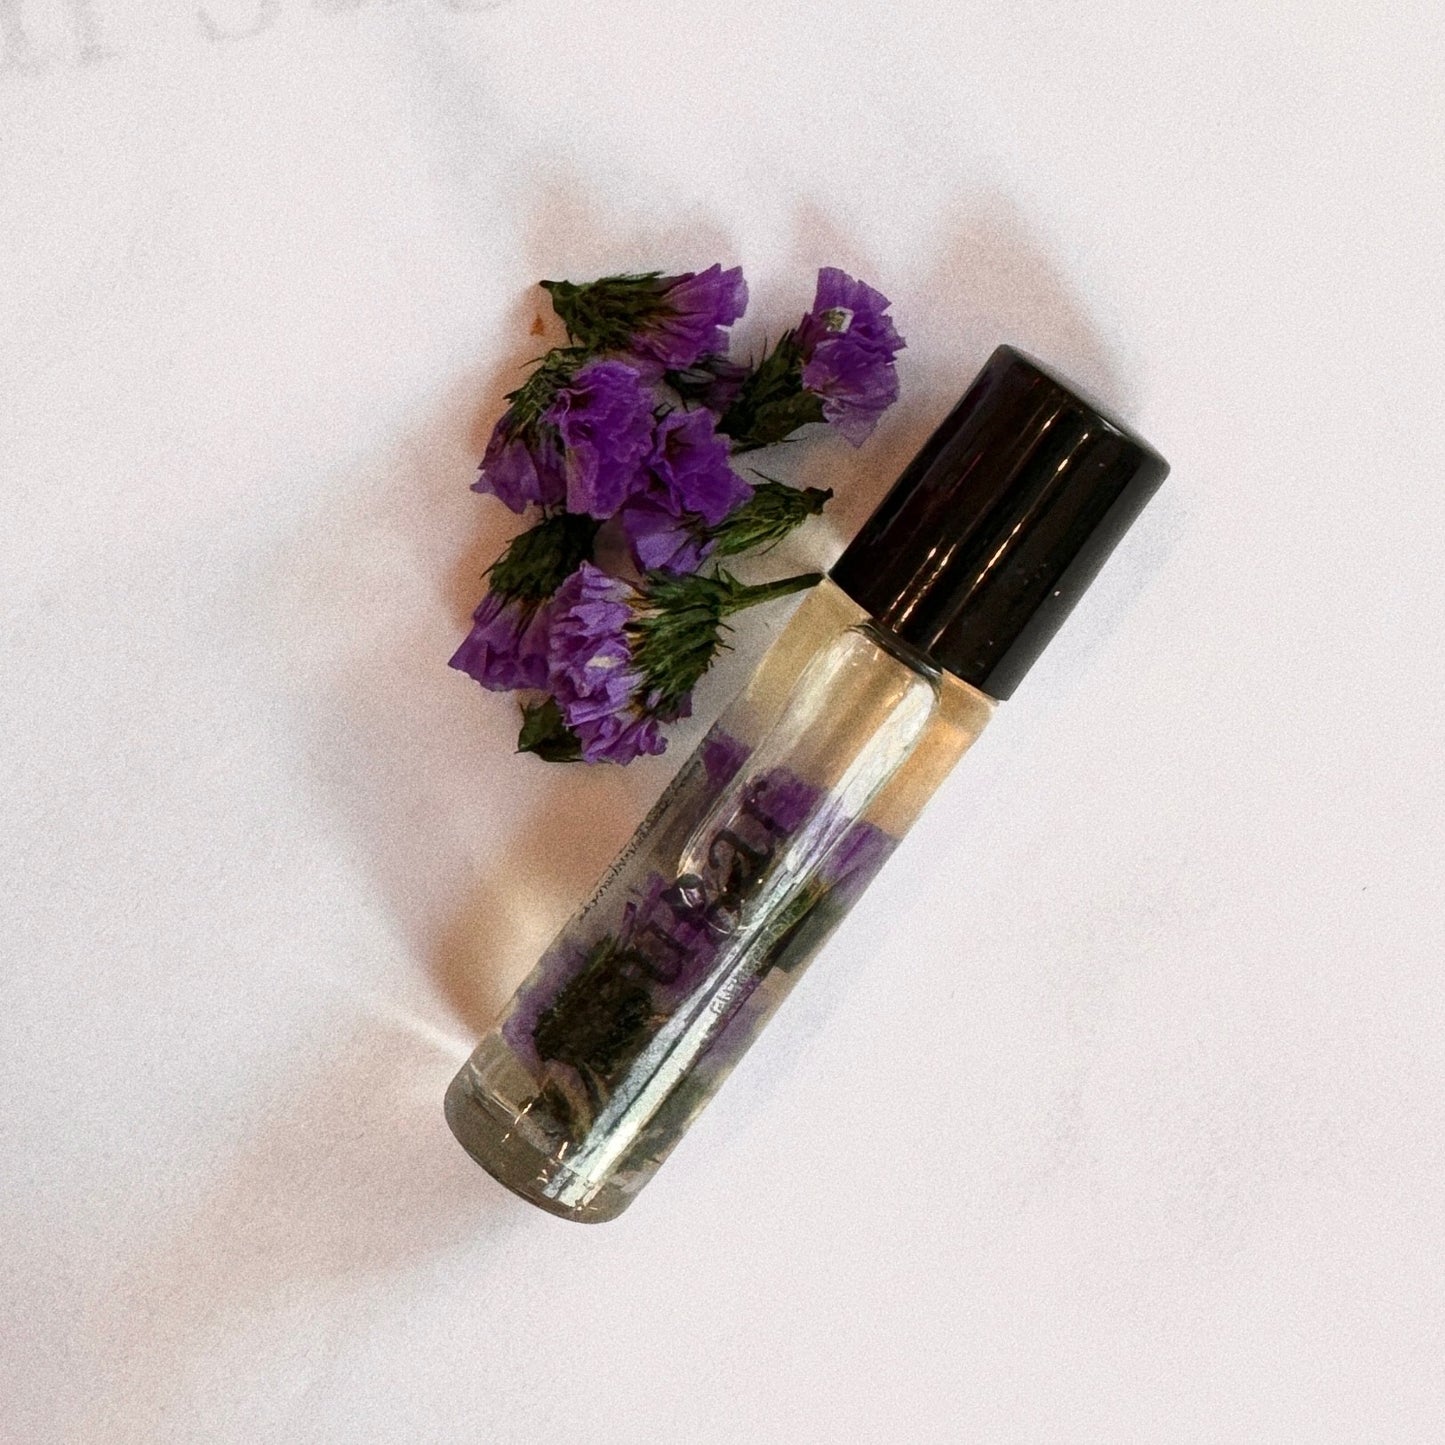 Bottle of Lavender 100% Organic Cuticle Oil from Skynailbysugar